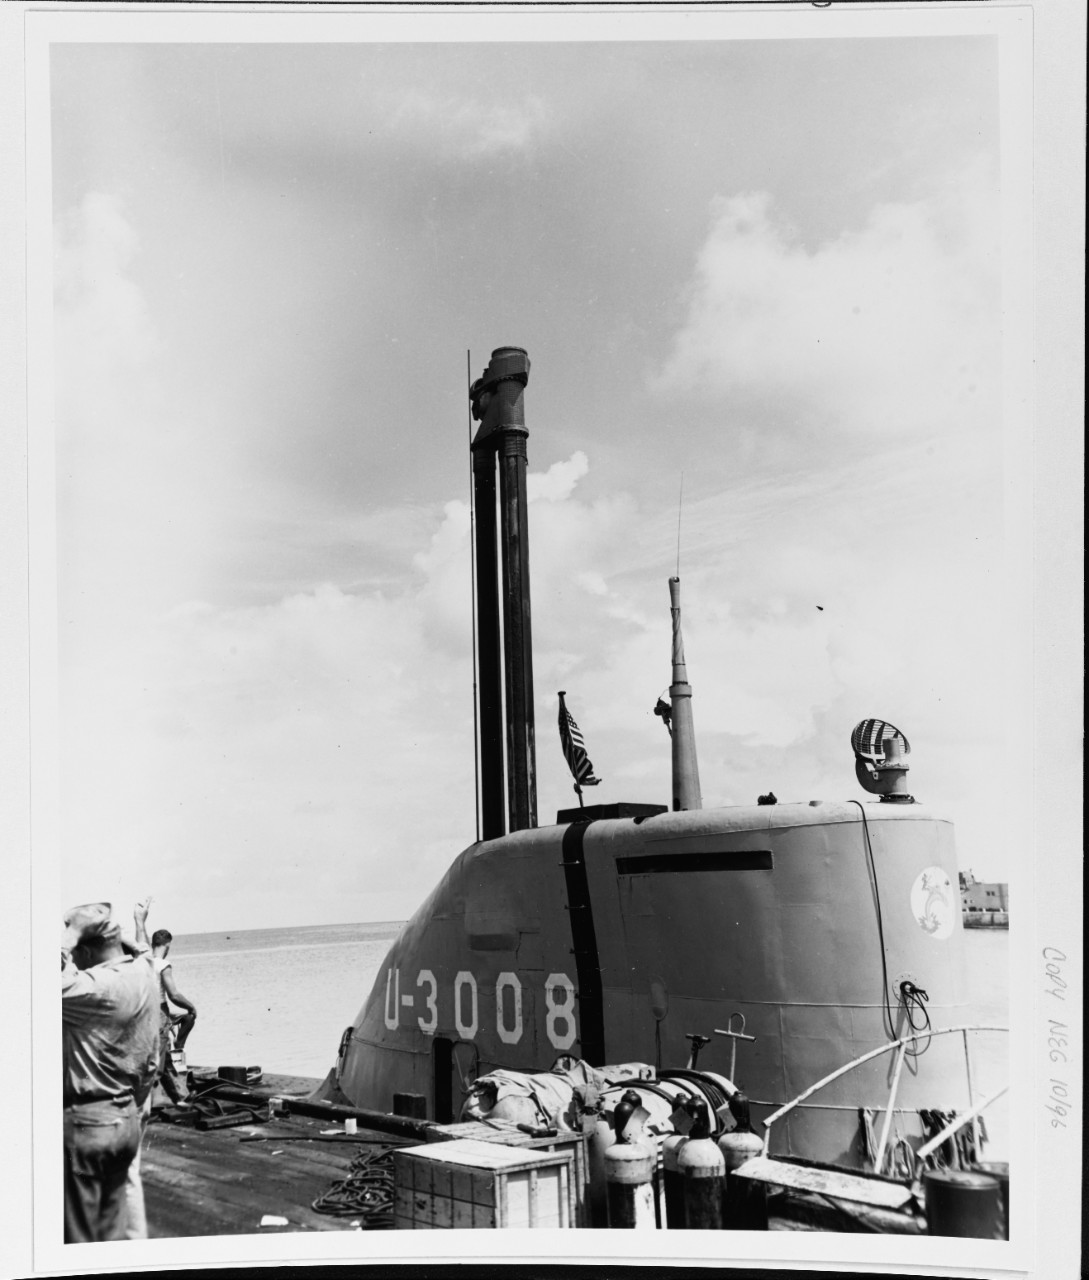 Photo #: 80-G-442938  USS U-3008